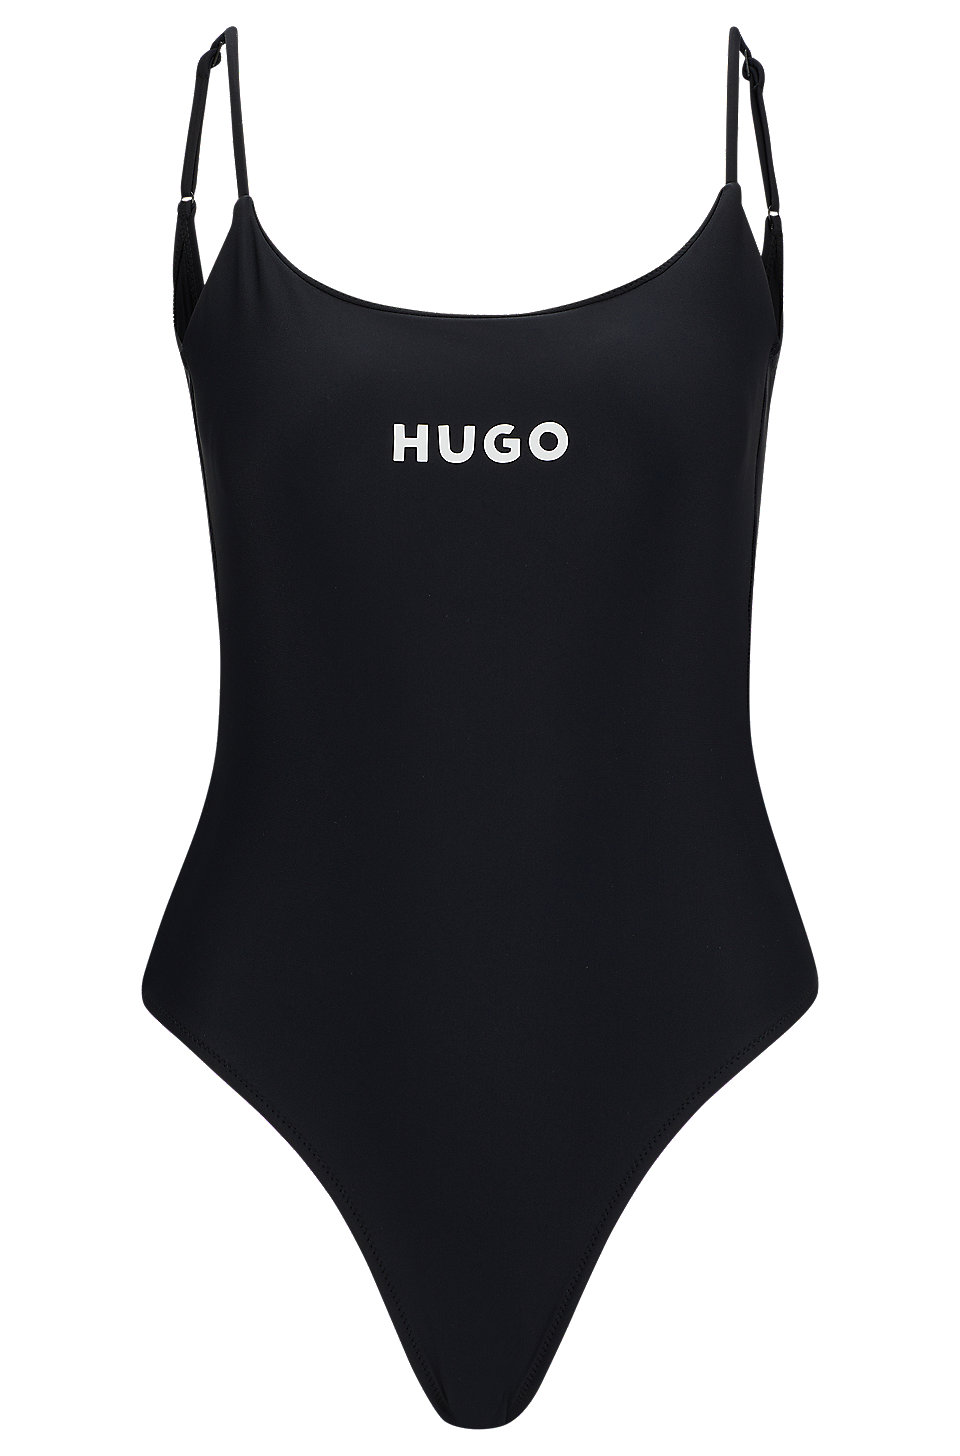 HUGO - Schnell trocknender Badeanzug mit kontrastfarbenem Logo